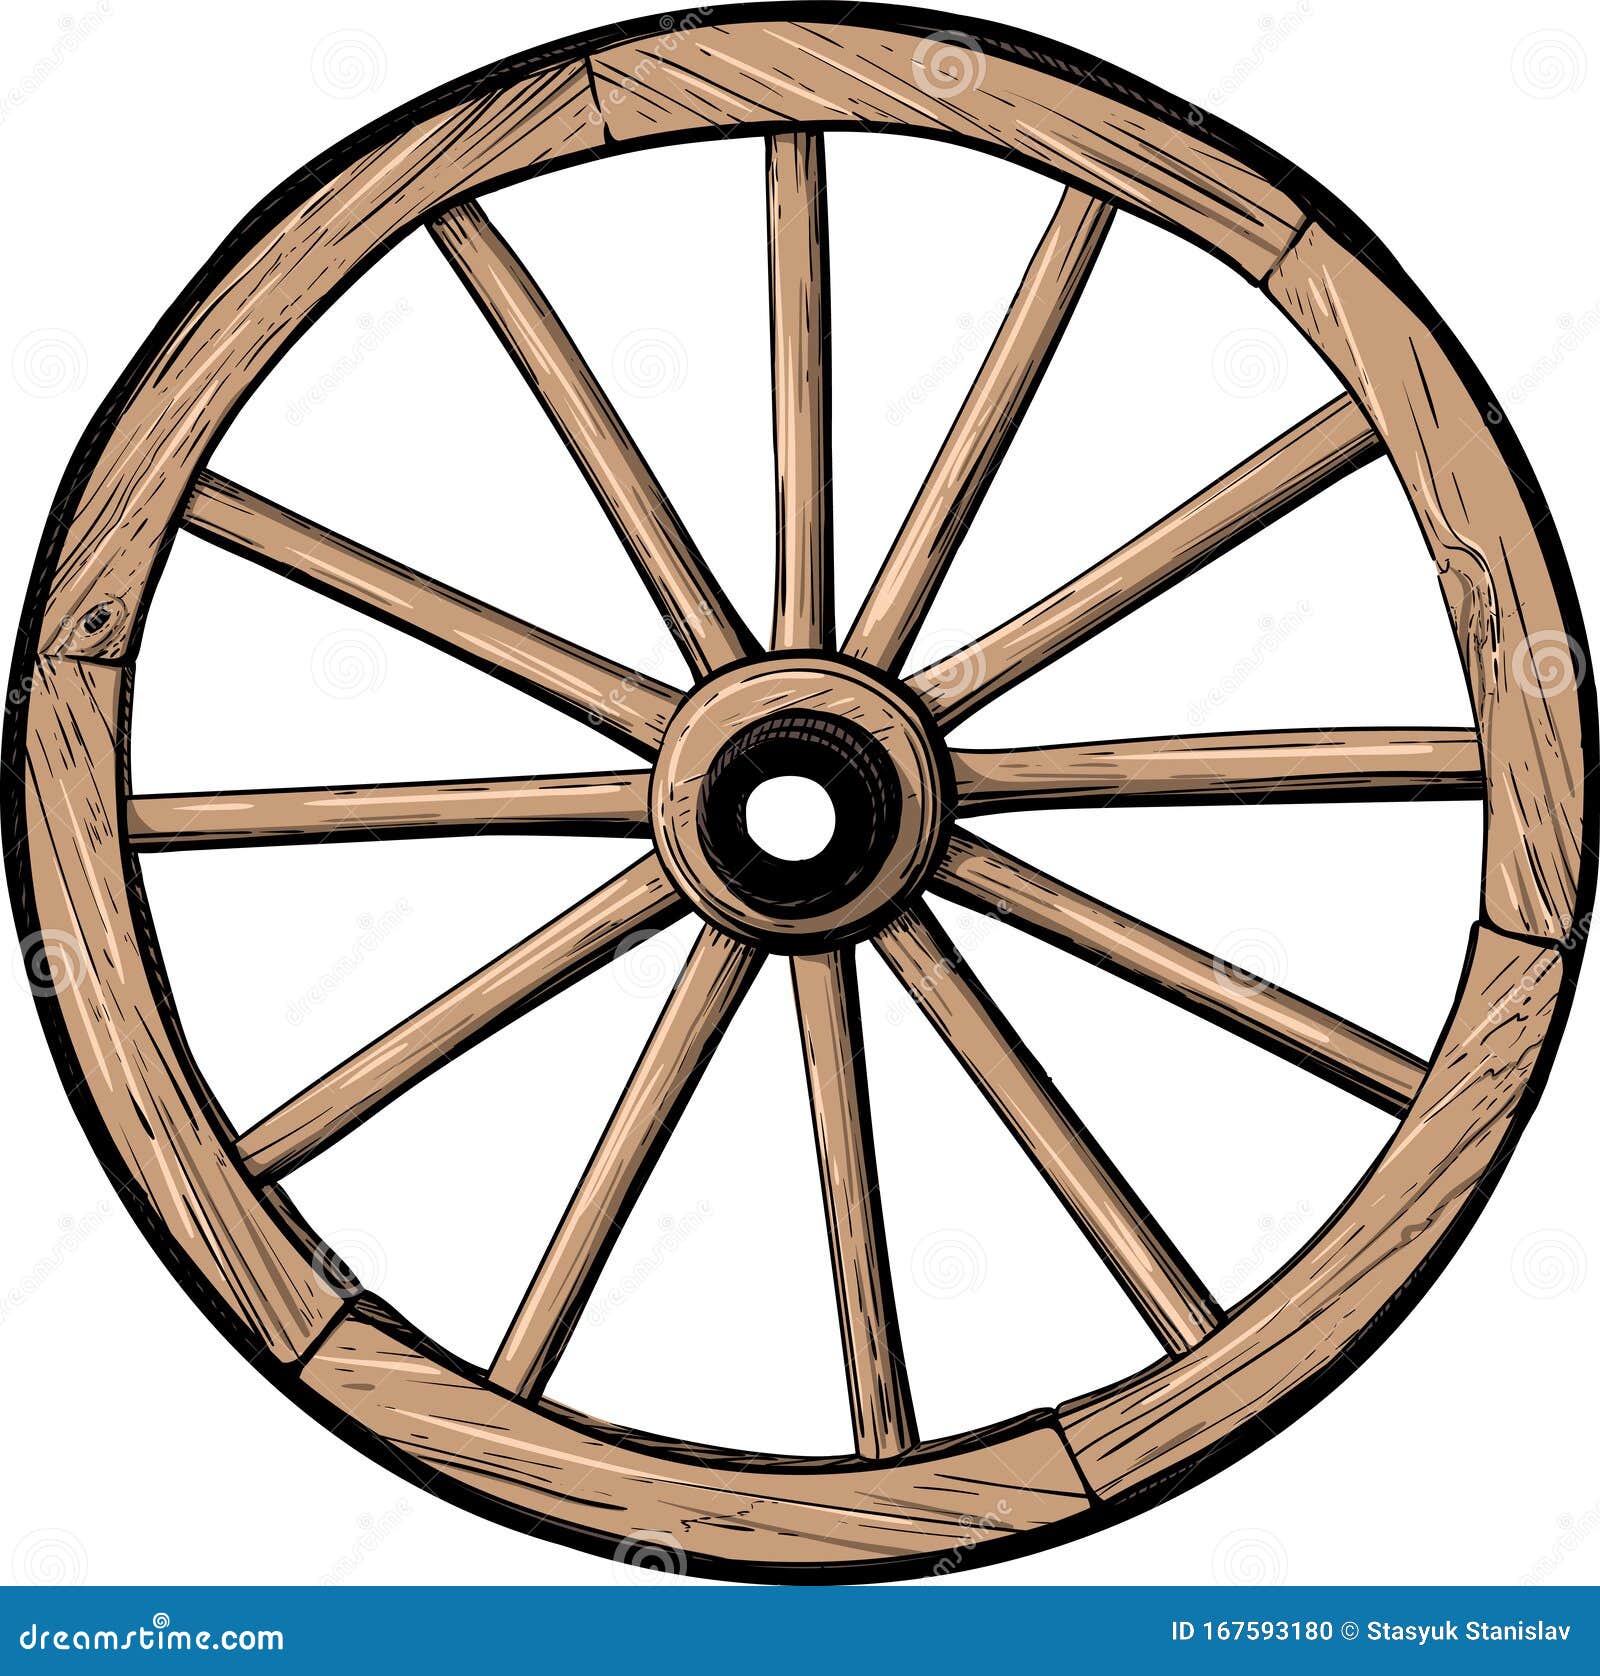 Classic traditional ship's 6 spoke wooden wheel 